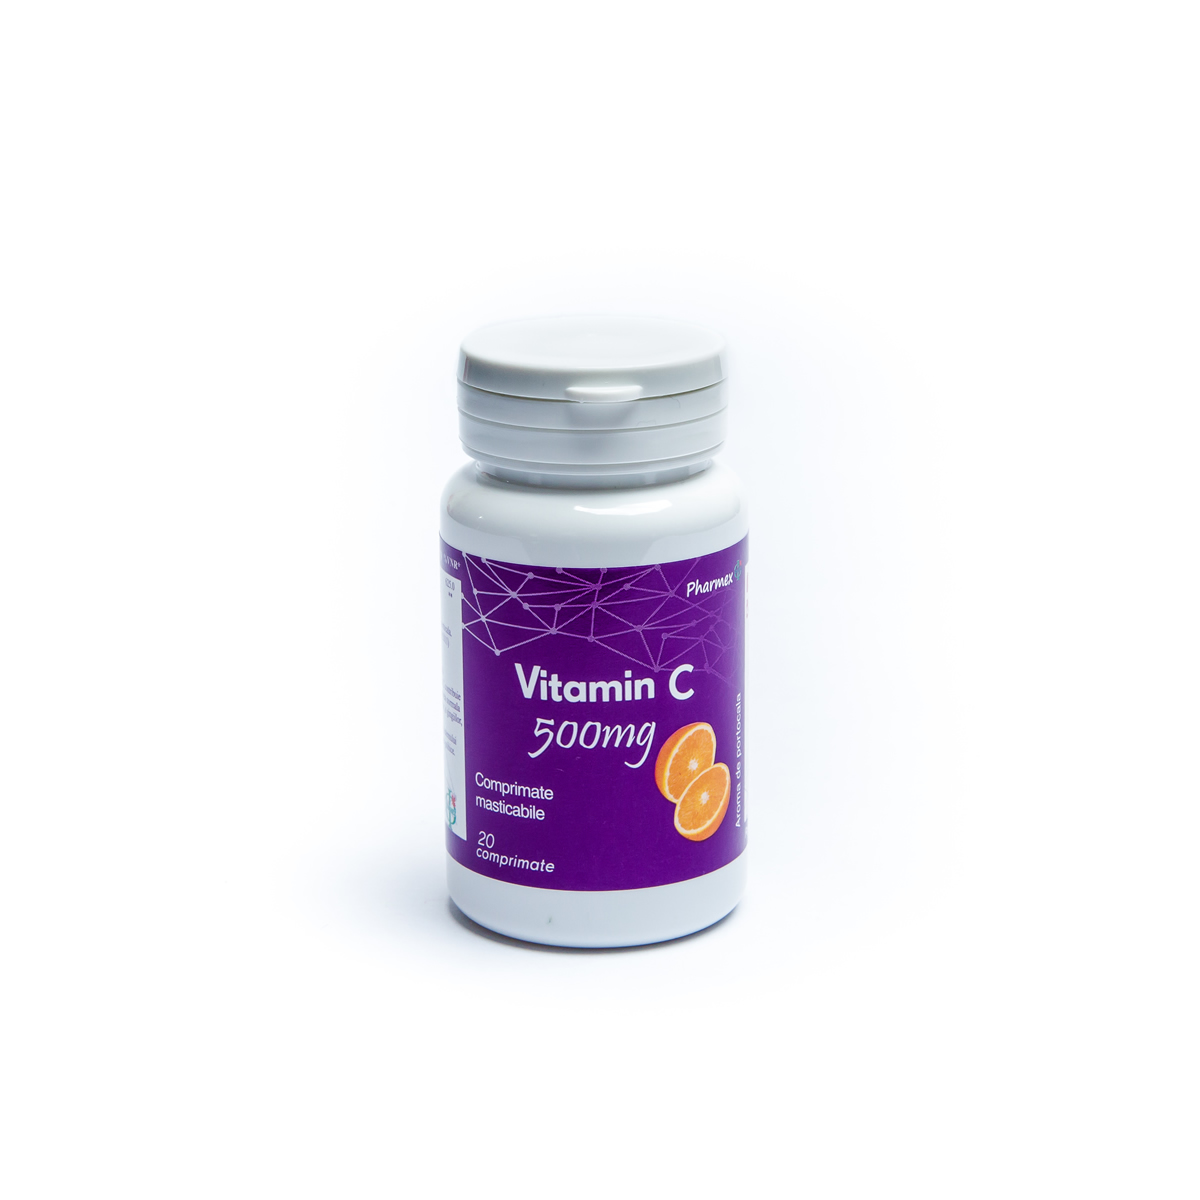 Imunitate - Vitamina C 500mg + Echinaceea, 20 comprimate, Pharmex, sinapis.ro